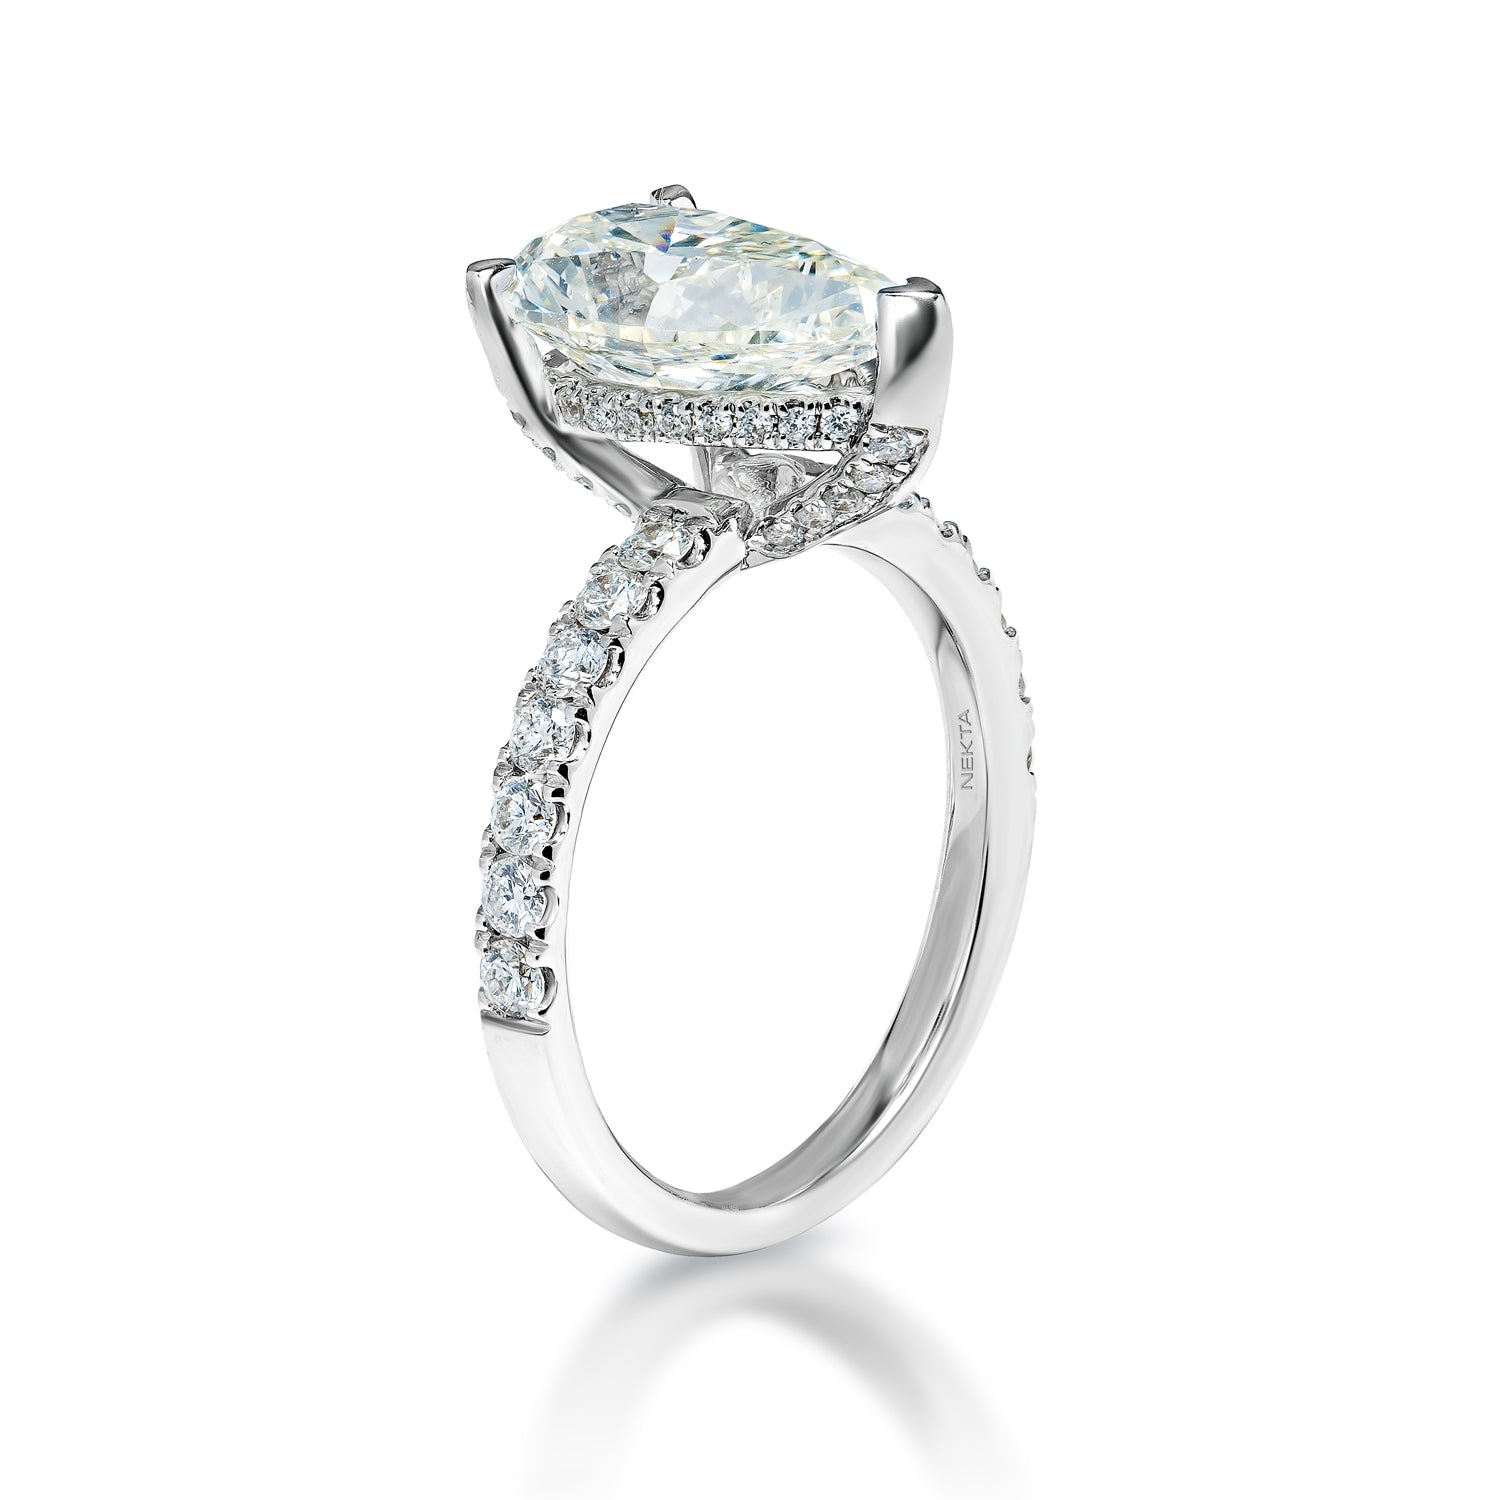 Sophie 4 Carat Pear Shape G VS1 Diamond Engagement Ring in 18k White Gold. Side View